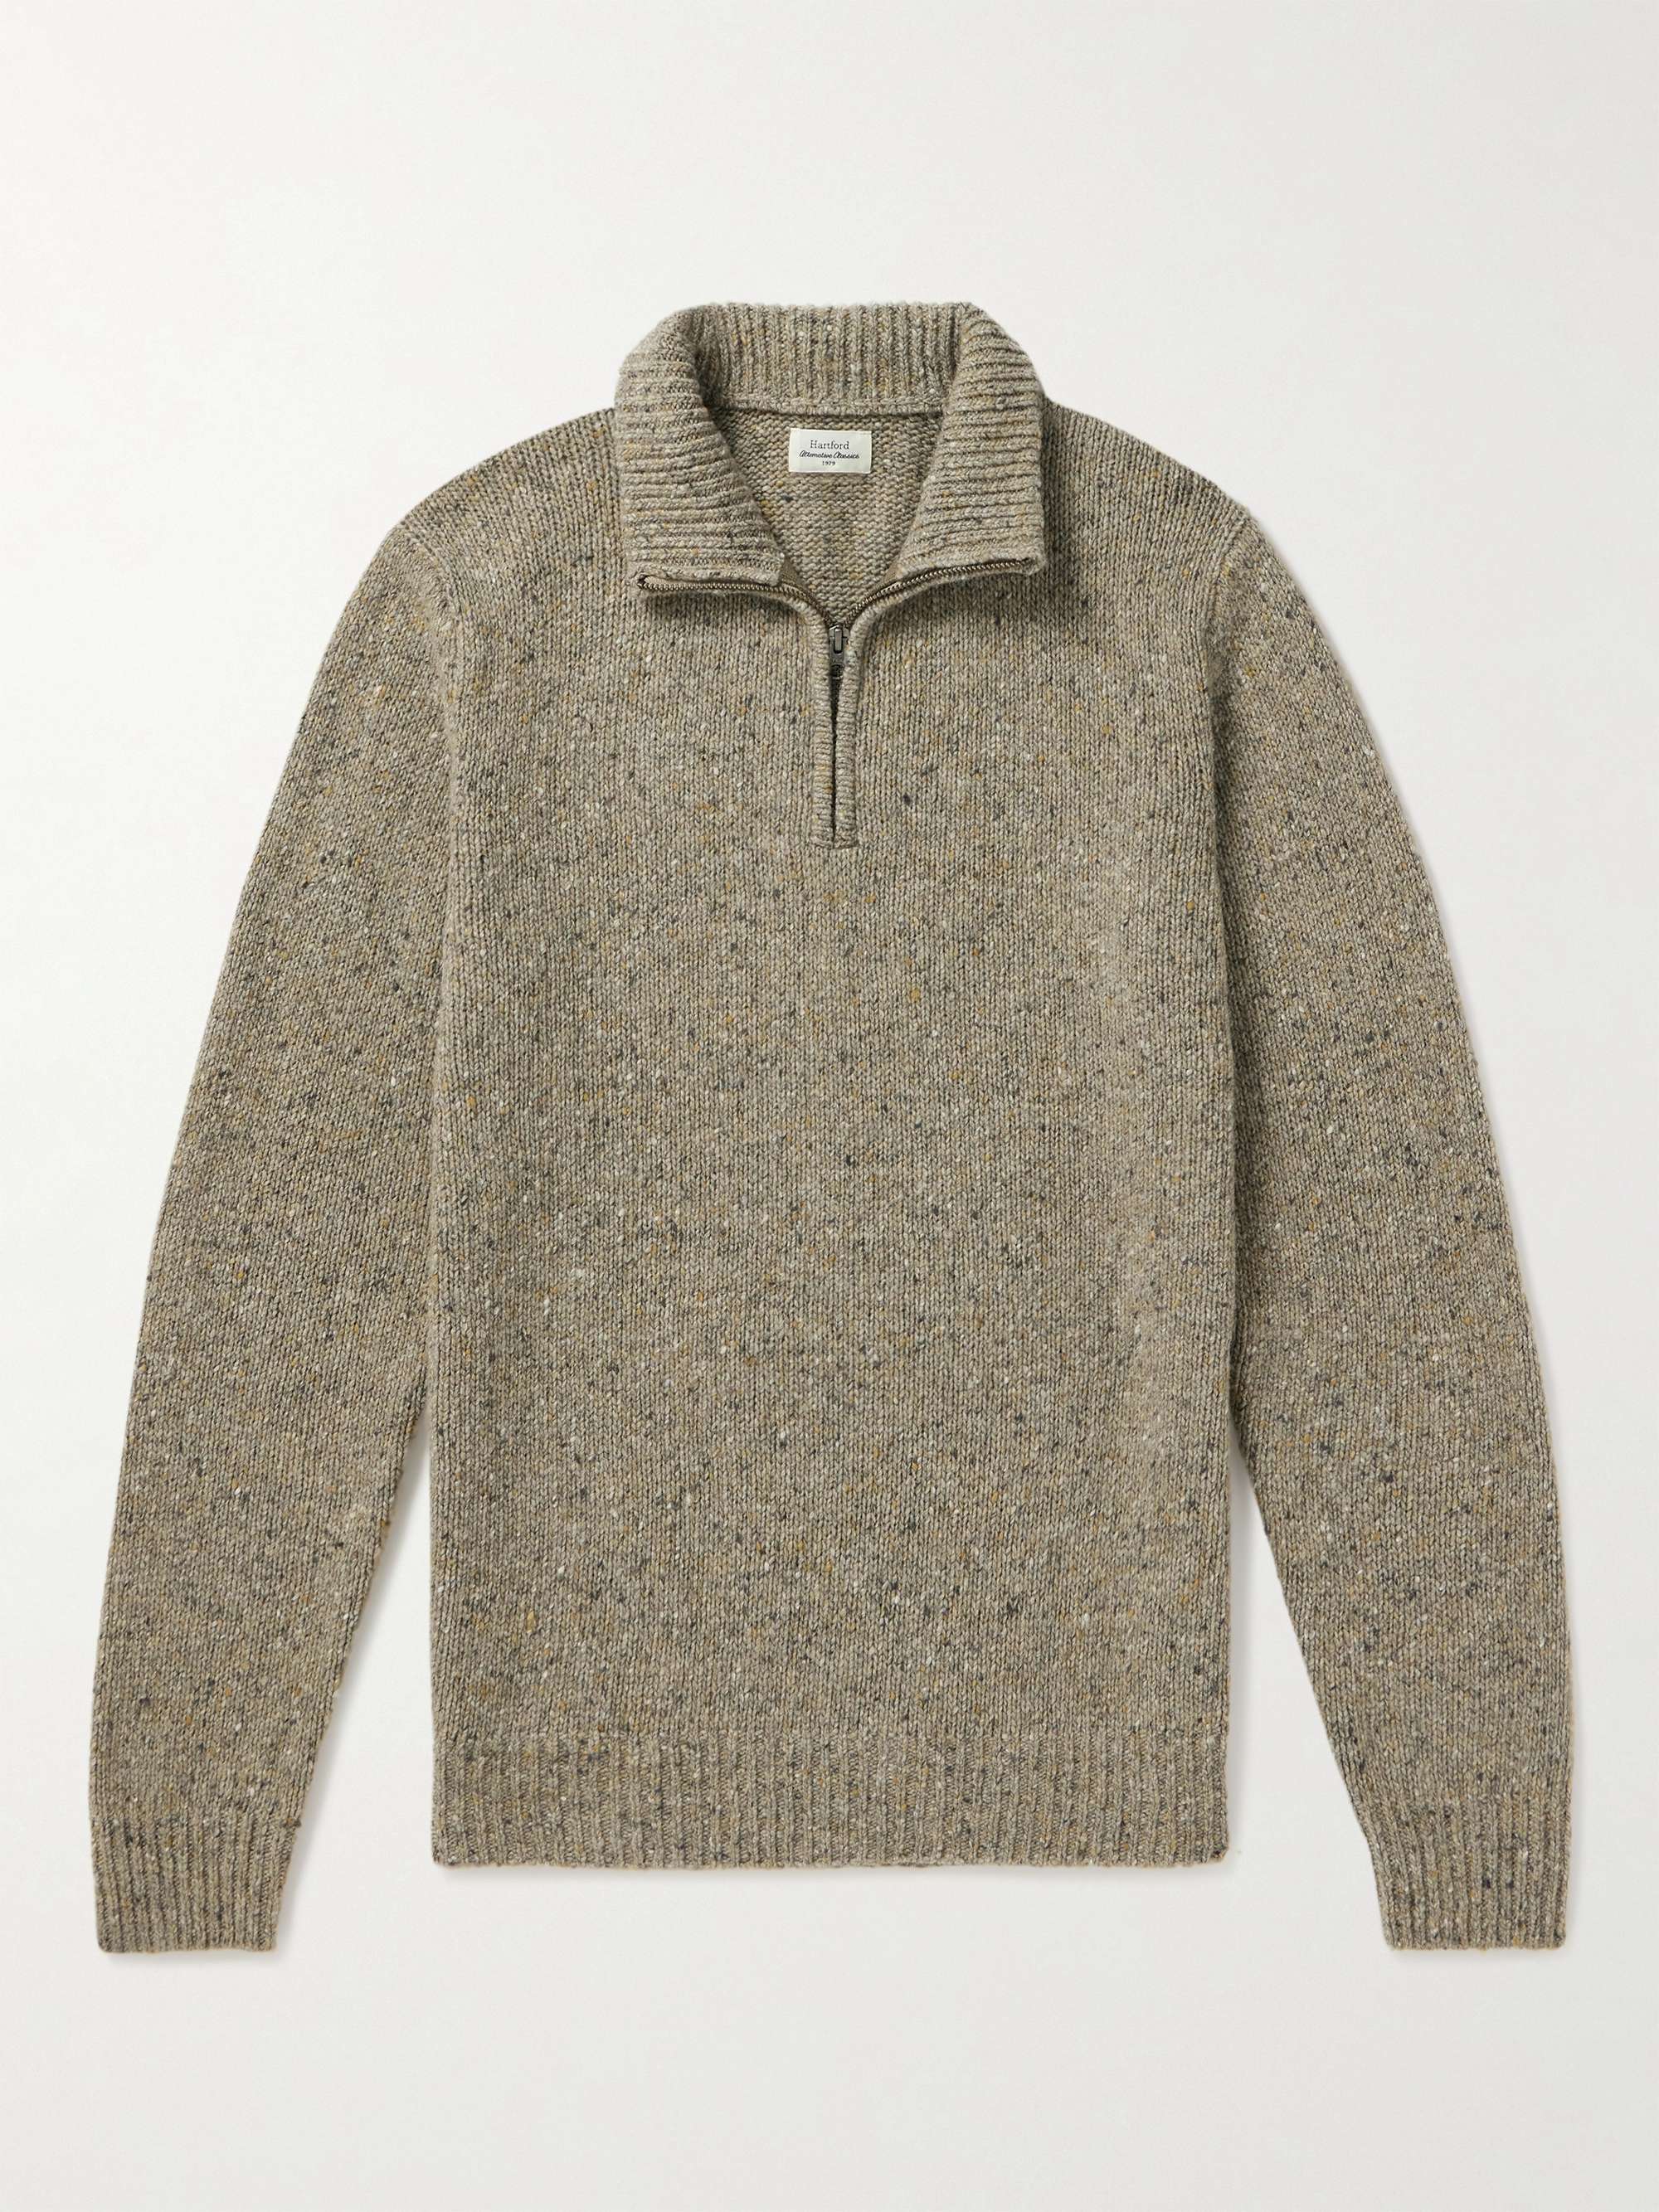 Pullover in misto lana Donegal con mezza zip Trucker HARTFORD da uomo | MR  PORTER